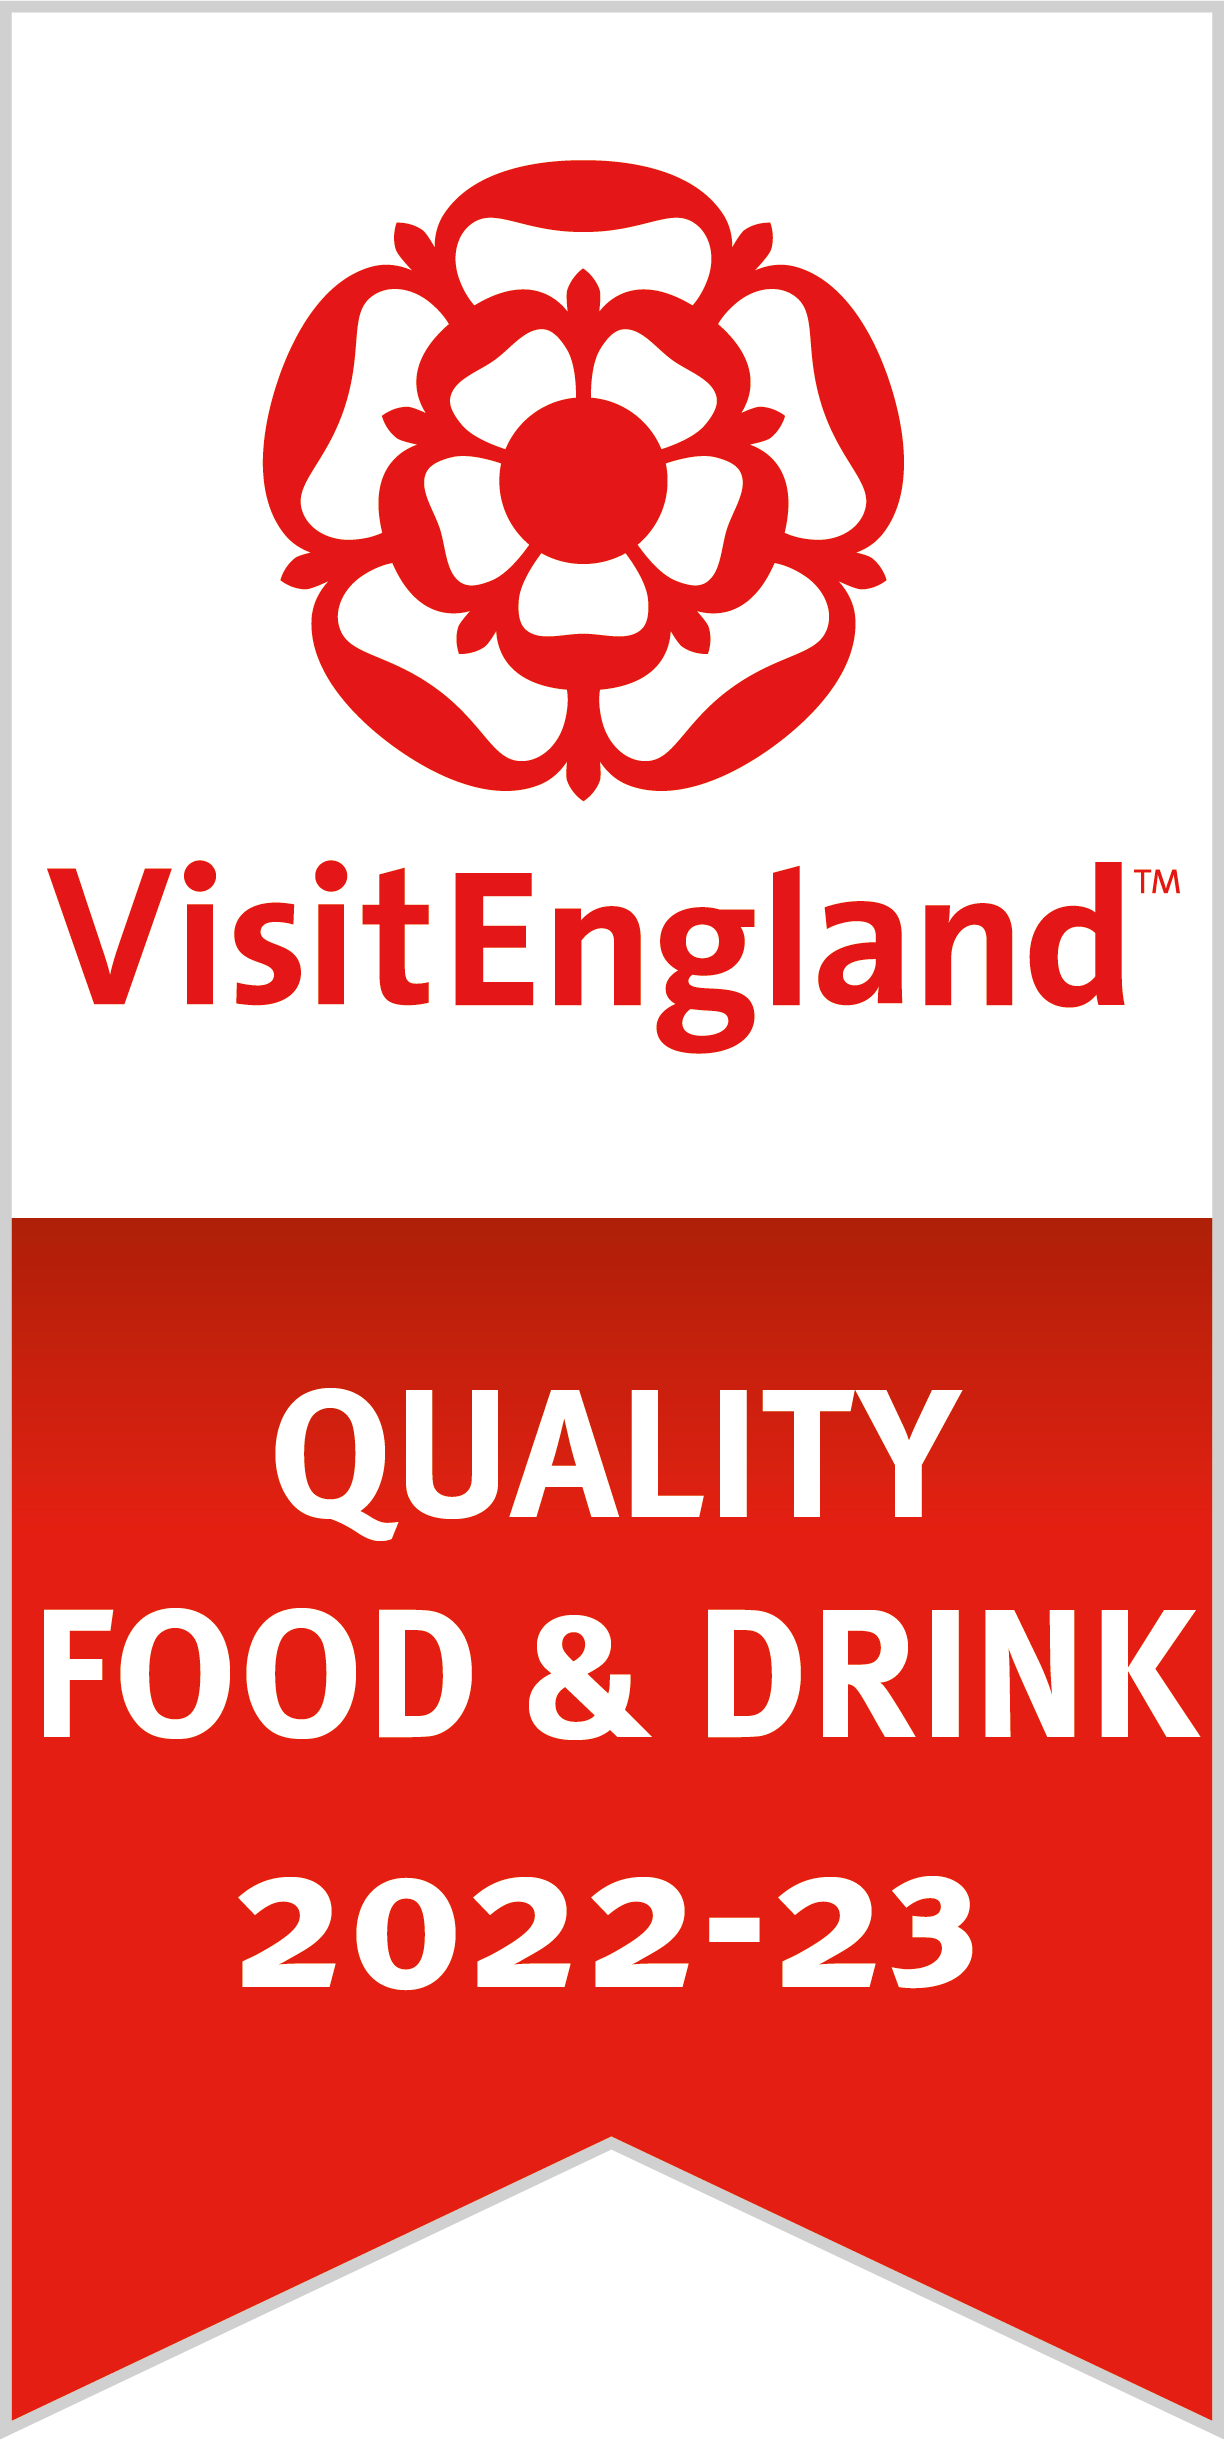 Visit England - Quality Food & Drink 2022-23